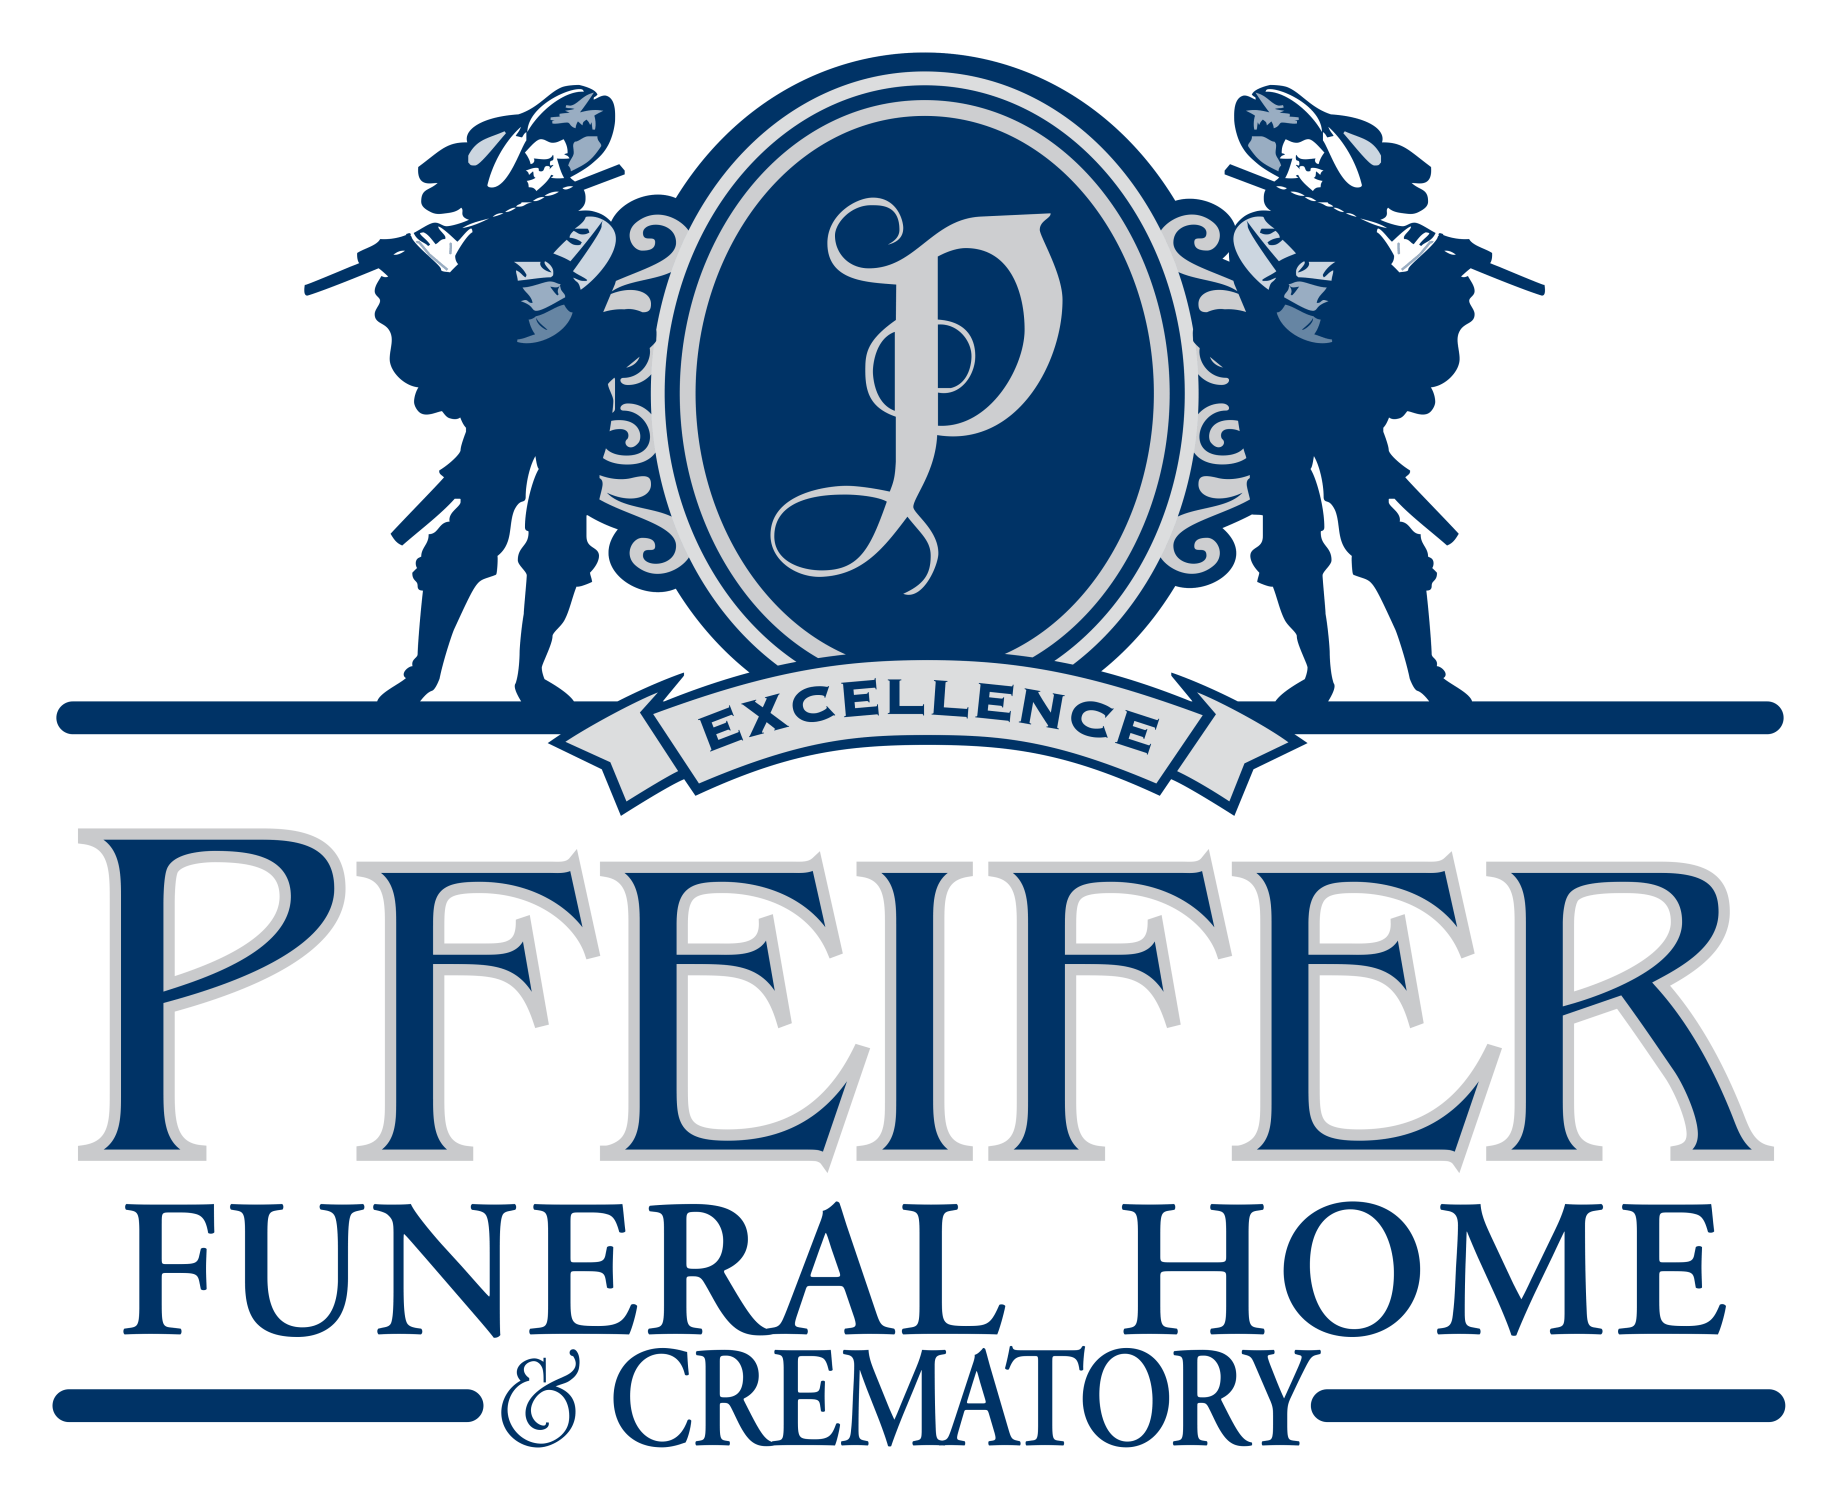 Reynoldsburg Logo - Pfeifer Funeral Home. Reynoldsburg OH funeral home and cremation